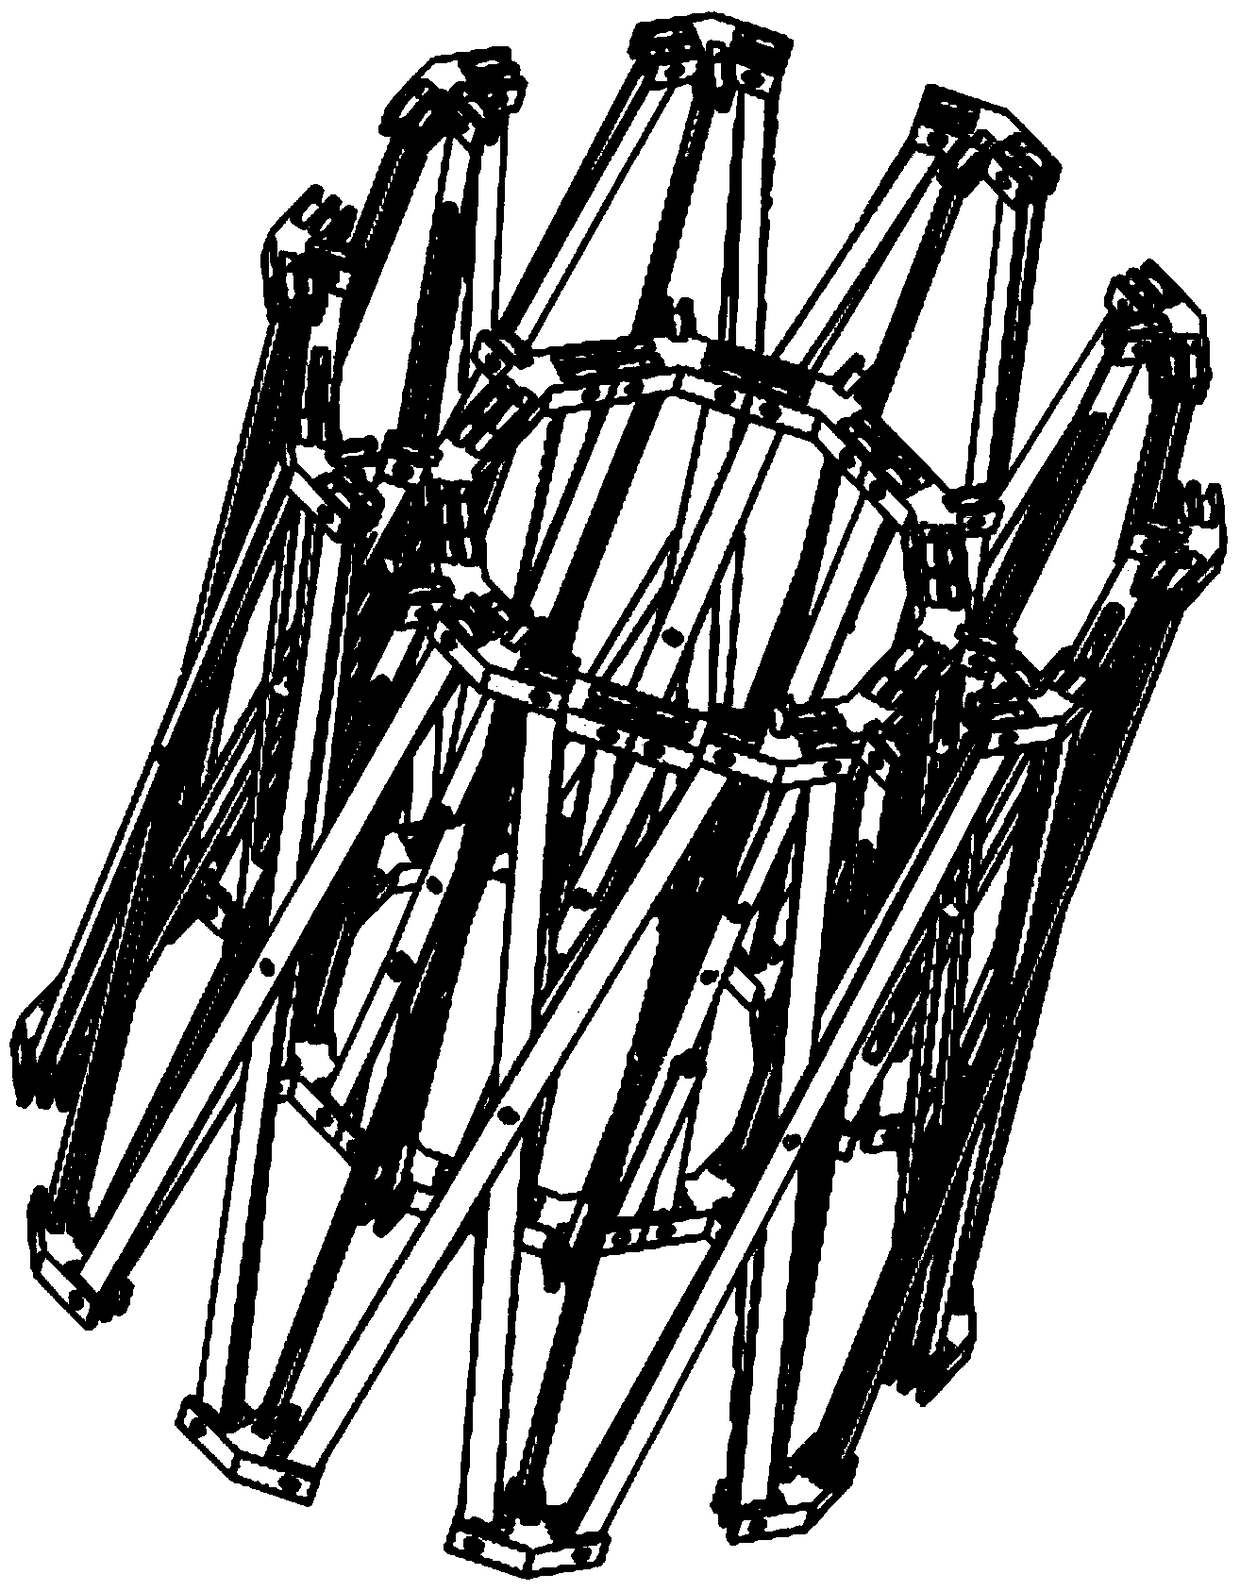 Scissor linkage double-layer ring truss expandable antenna mechanism